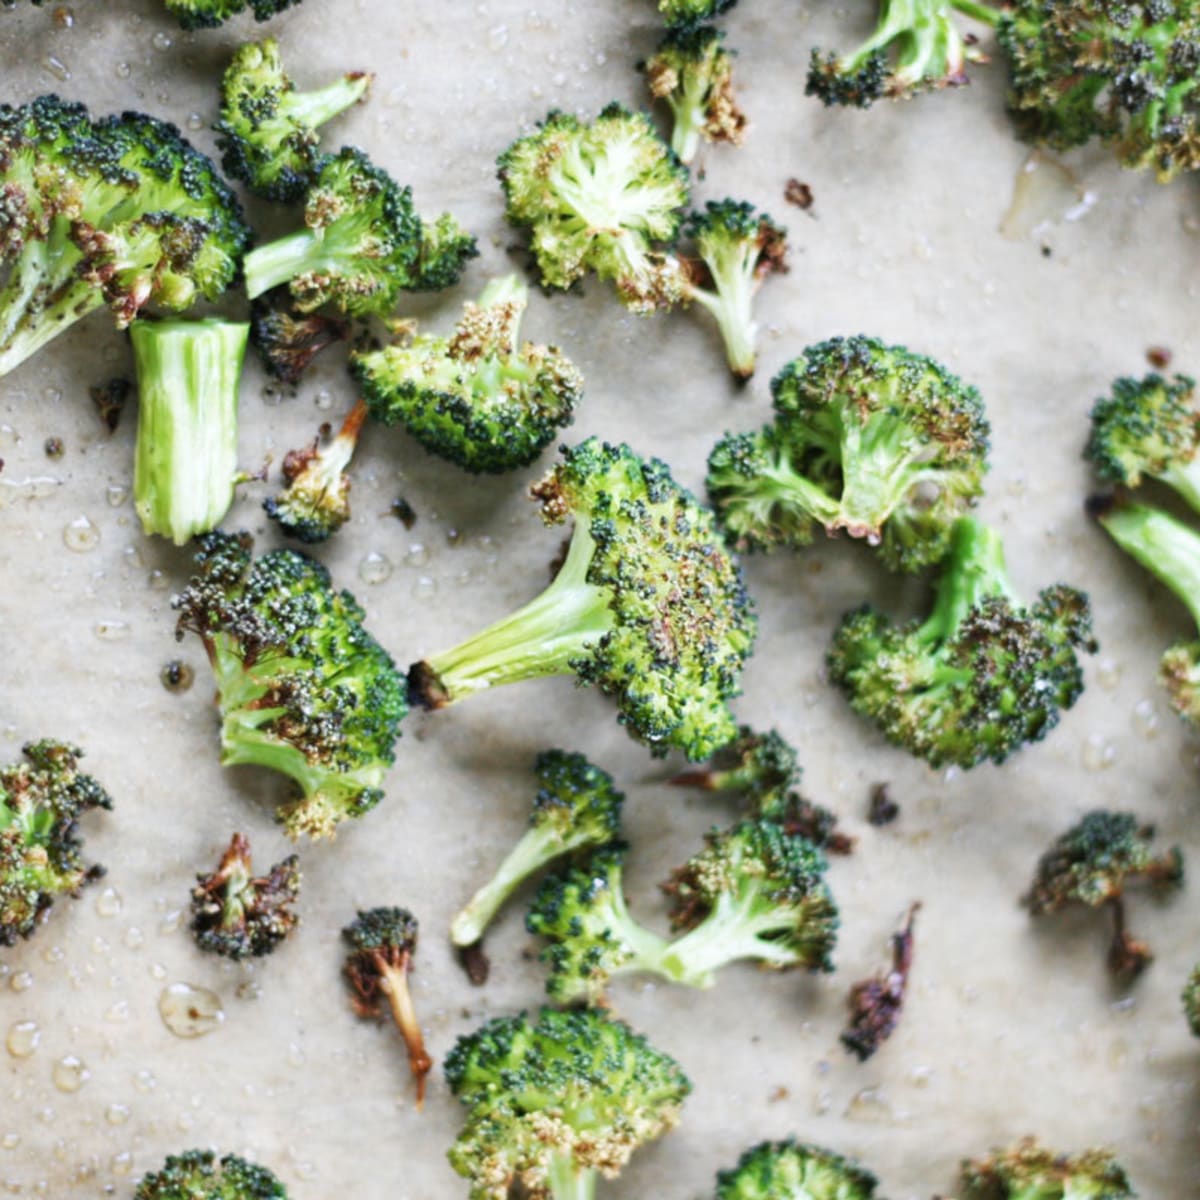 How To Make Roasted Broccoli Without Burning It Organic Authority